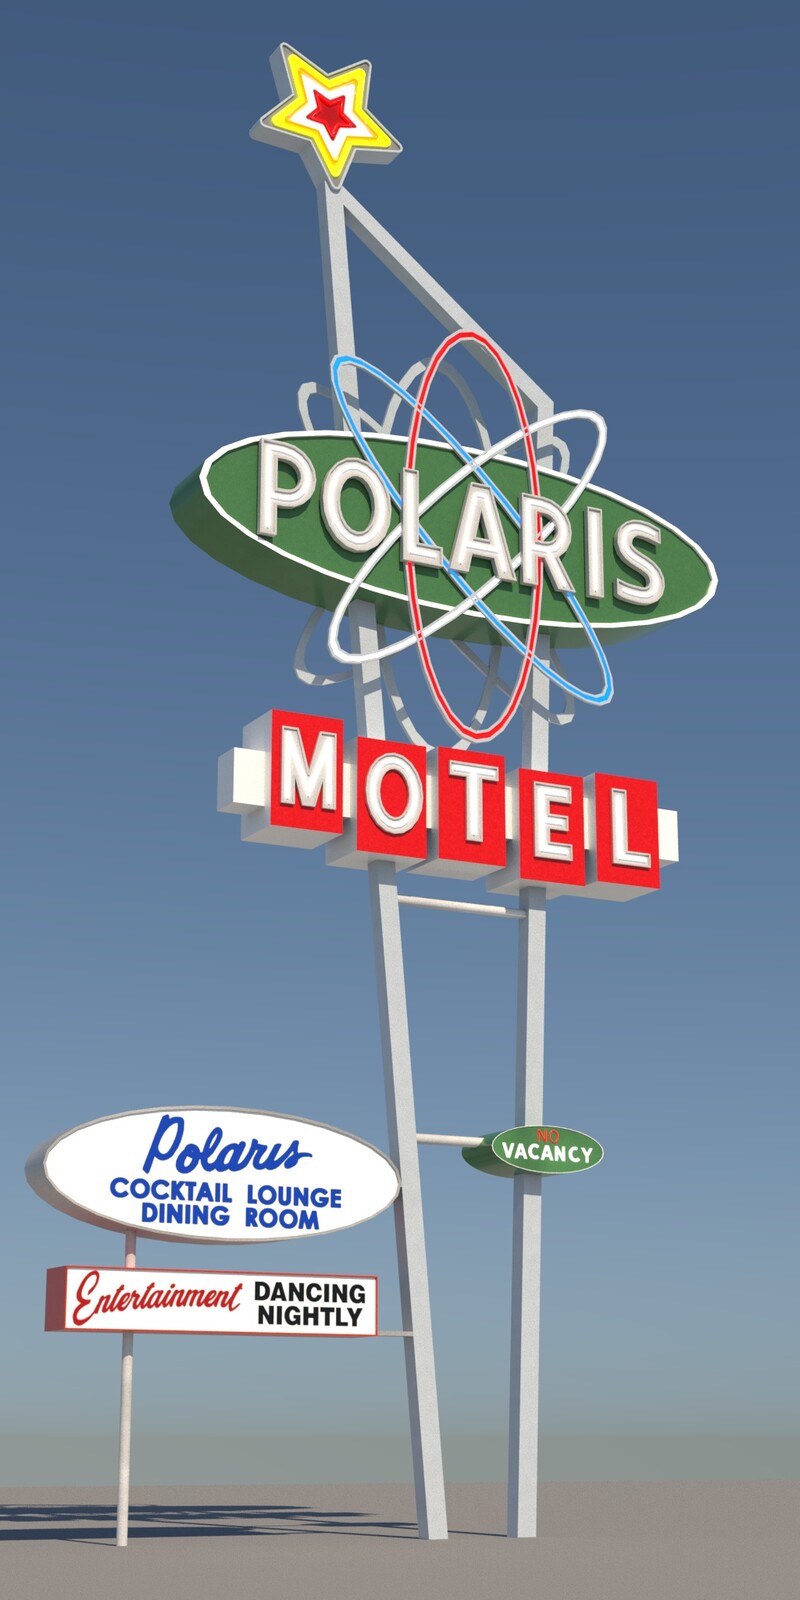 Polaris Motel